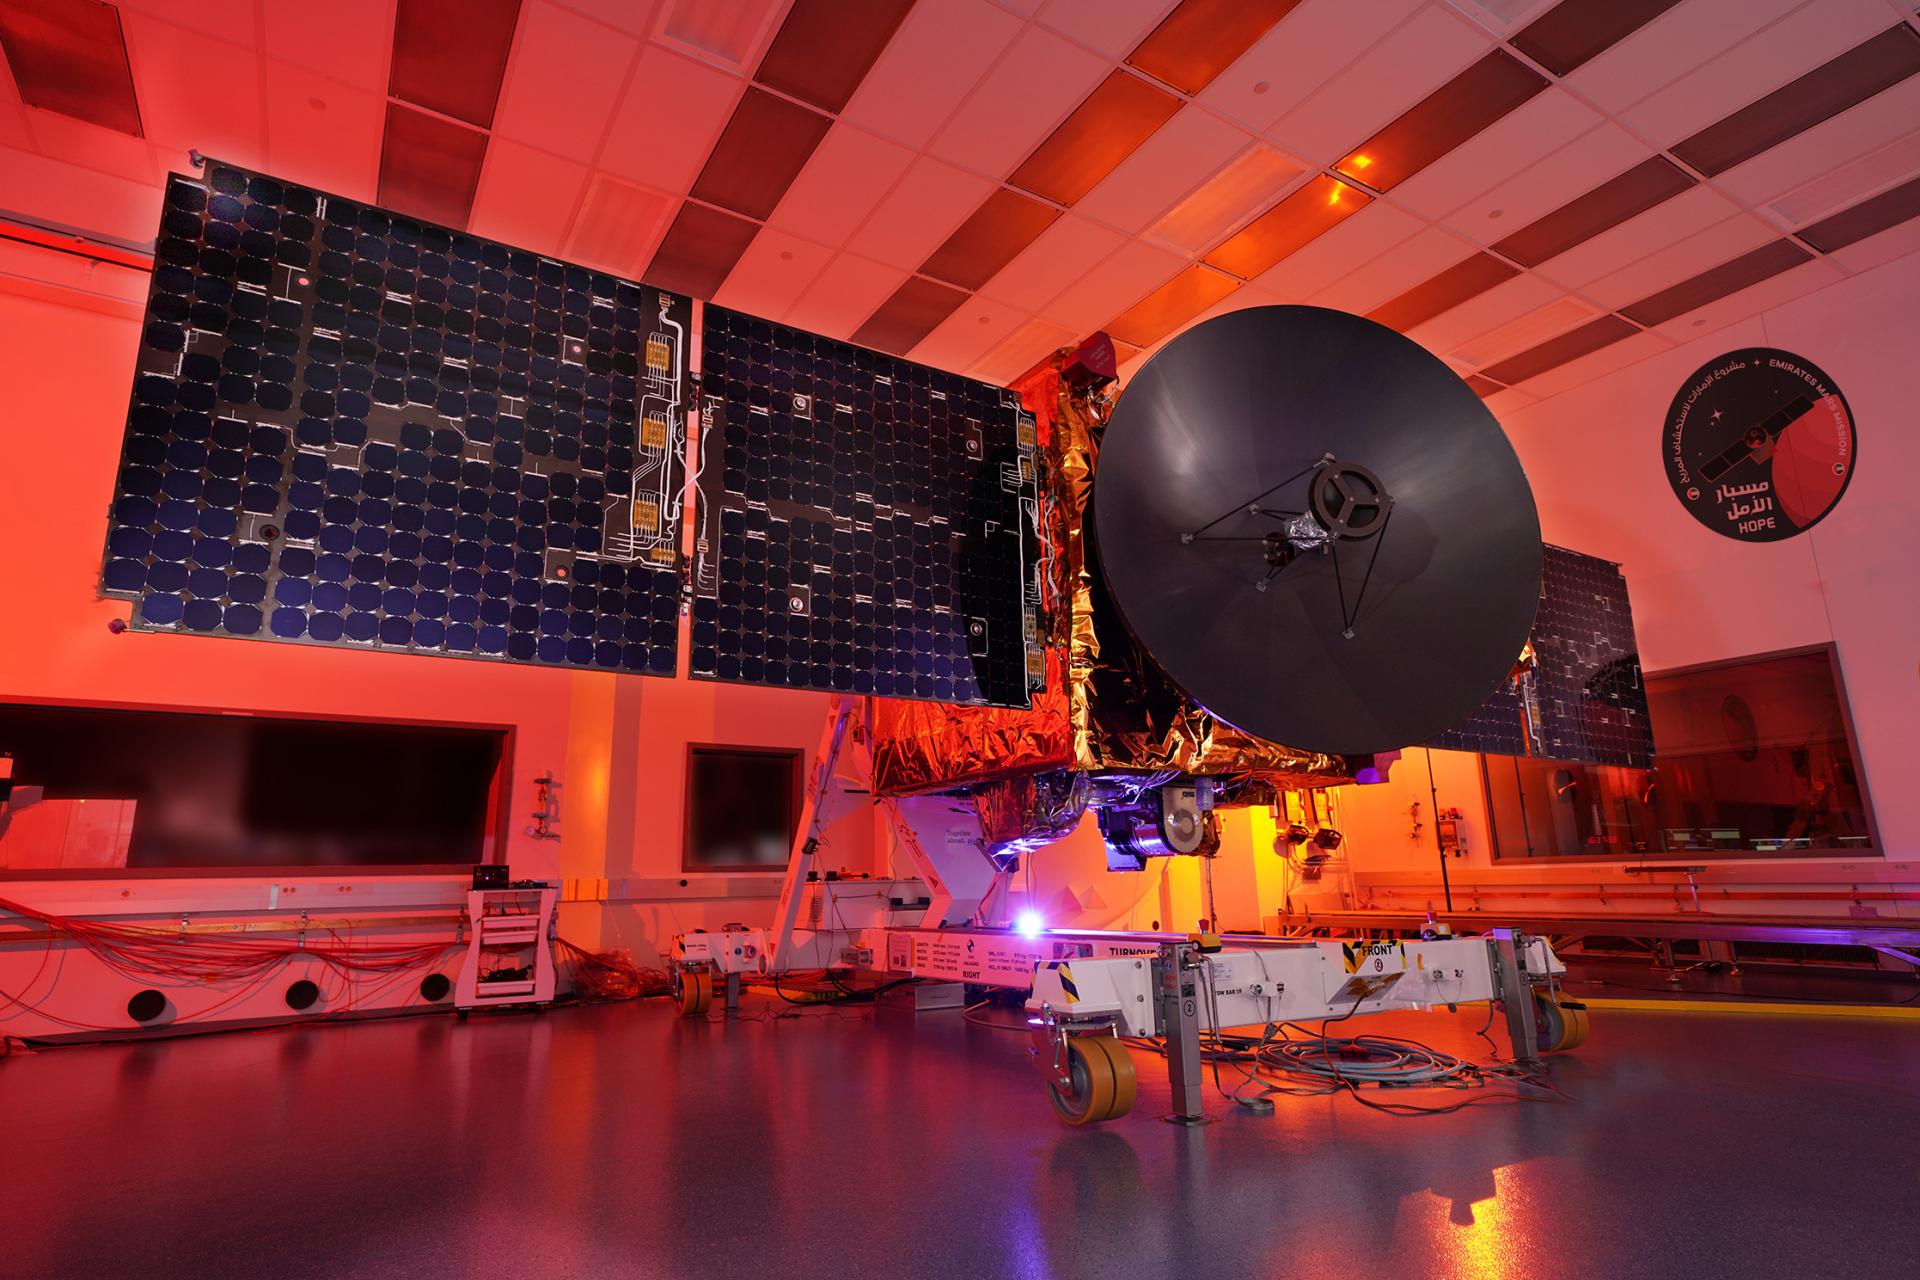 Image of the UAE Hope spacecraft